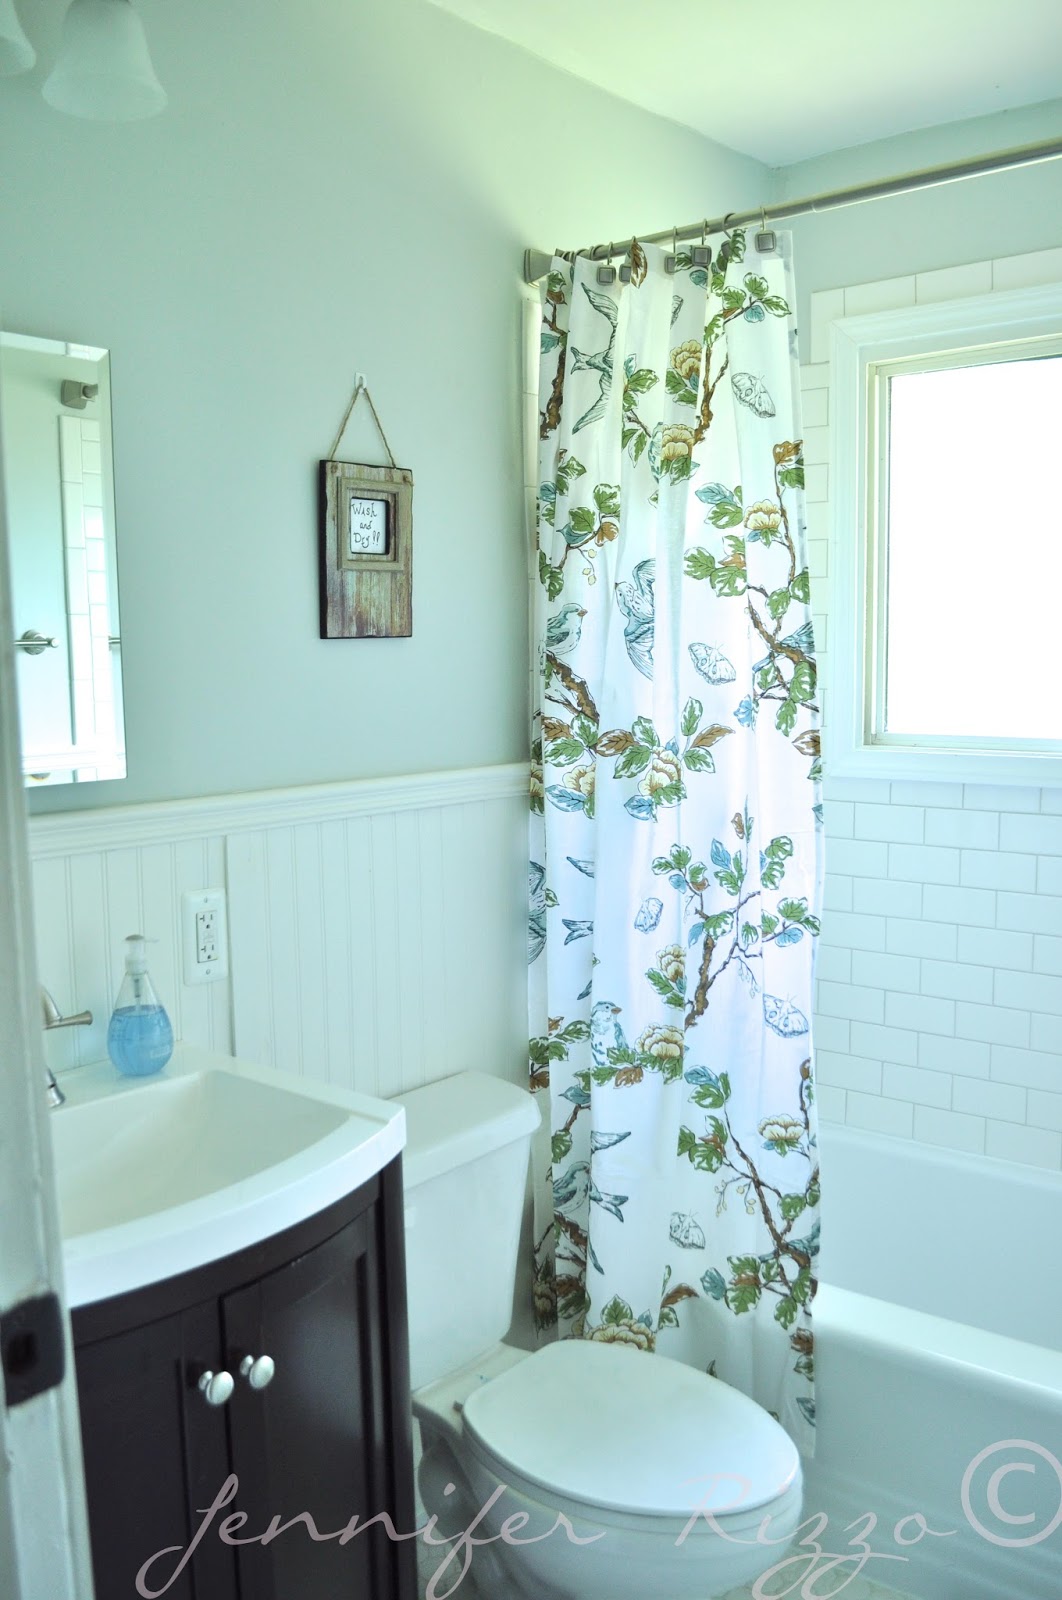 bathroom-wonderful-blue-shade-vintage-bathroom-tile-patterns-in-classic-kitchen-design-ideas-with-floral-pattern-bathtub-drapes-adorable-vintage-bathroom-tile-patterns-for-your-fabulous-bathroom